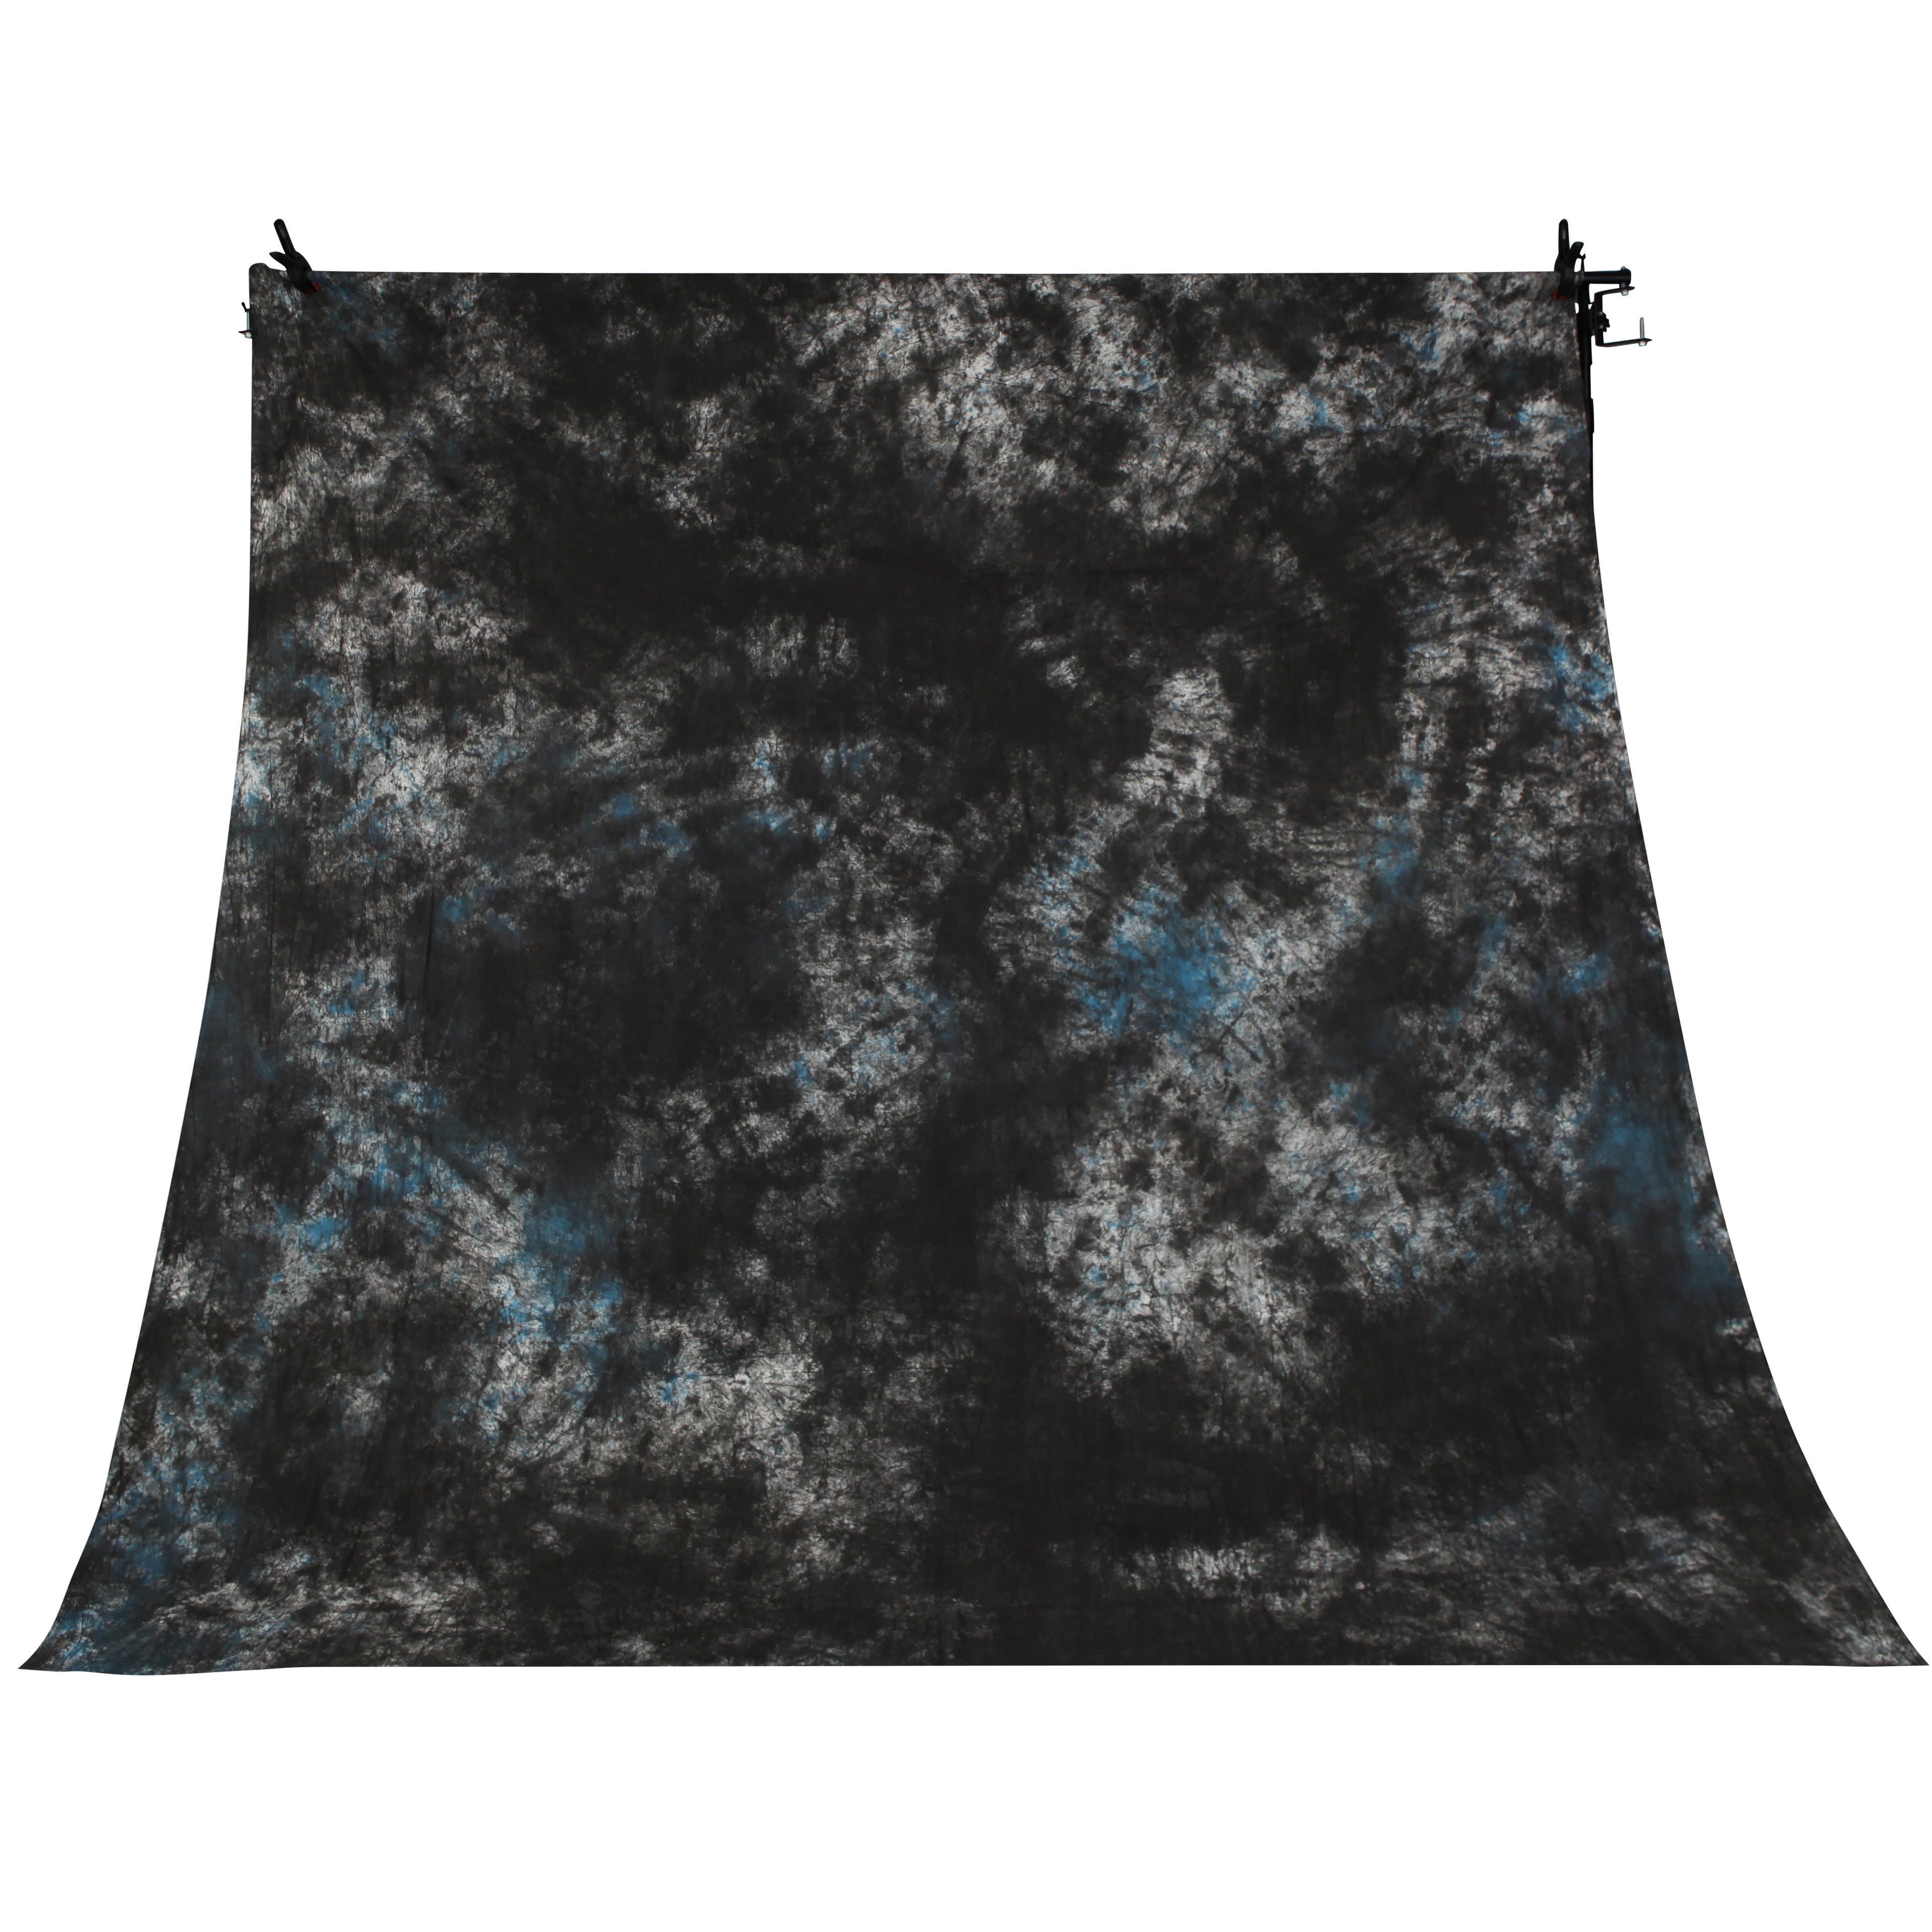 Spectrum Kaleidoscope Series Mottled Cotton Muslin Backdrop 3M x 5M - Midnight Sea Breeze